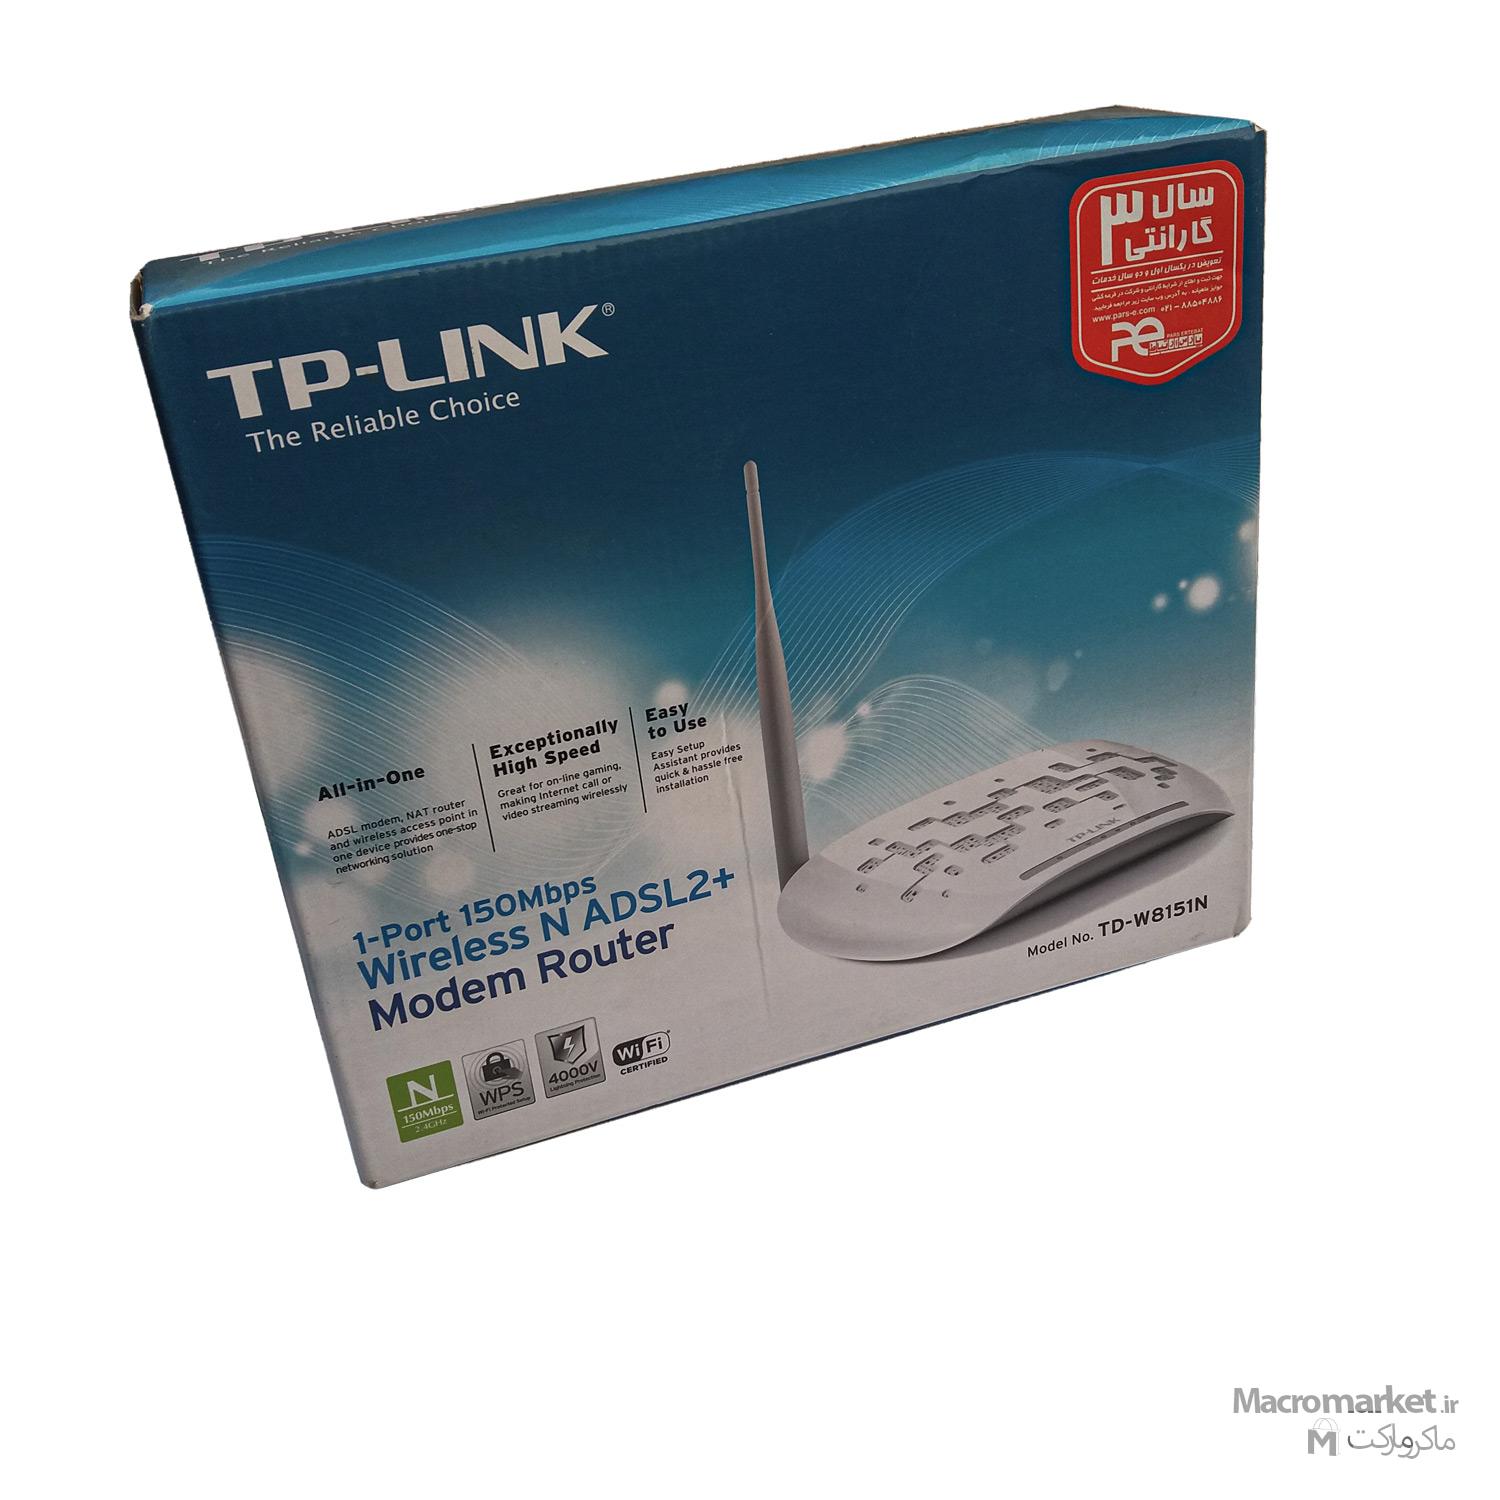 مودم ADSL2+ TP-Link TD-W8151N - آنتن قوی ، 150 مگابایت بر ثانیه